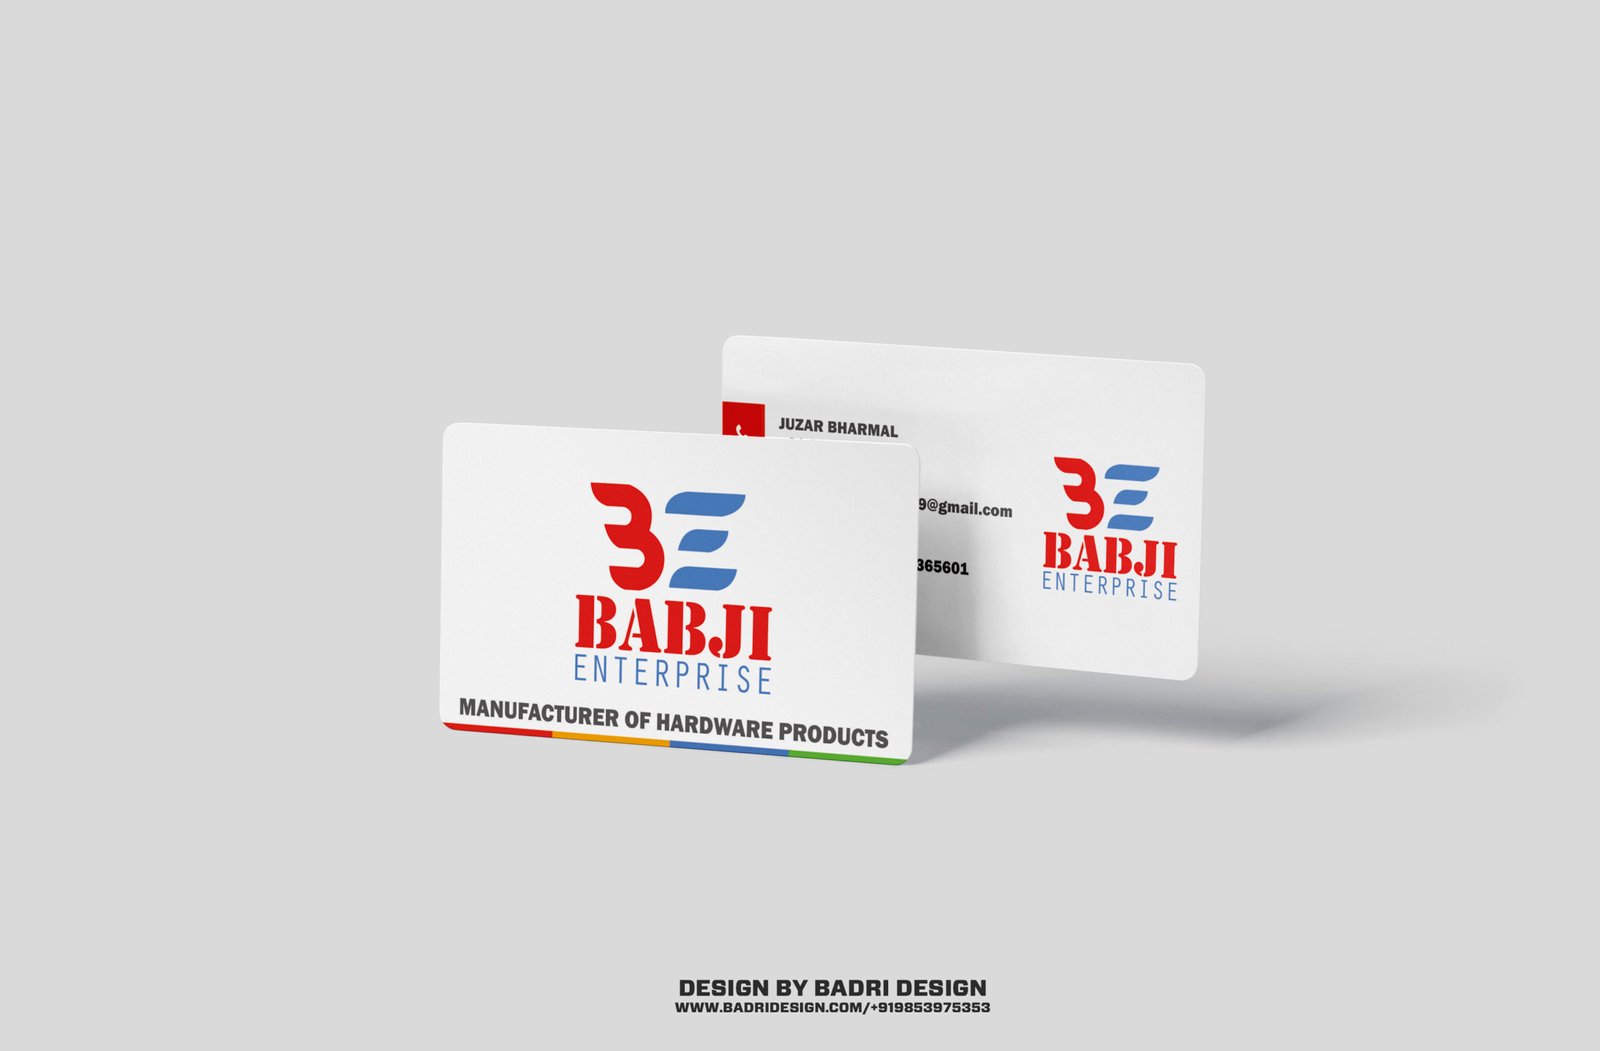 Babji Enterprise manufacturing company business card design by Badri Design